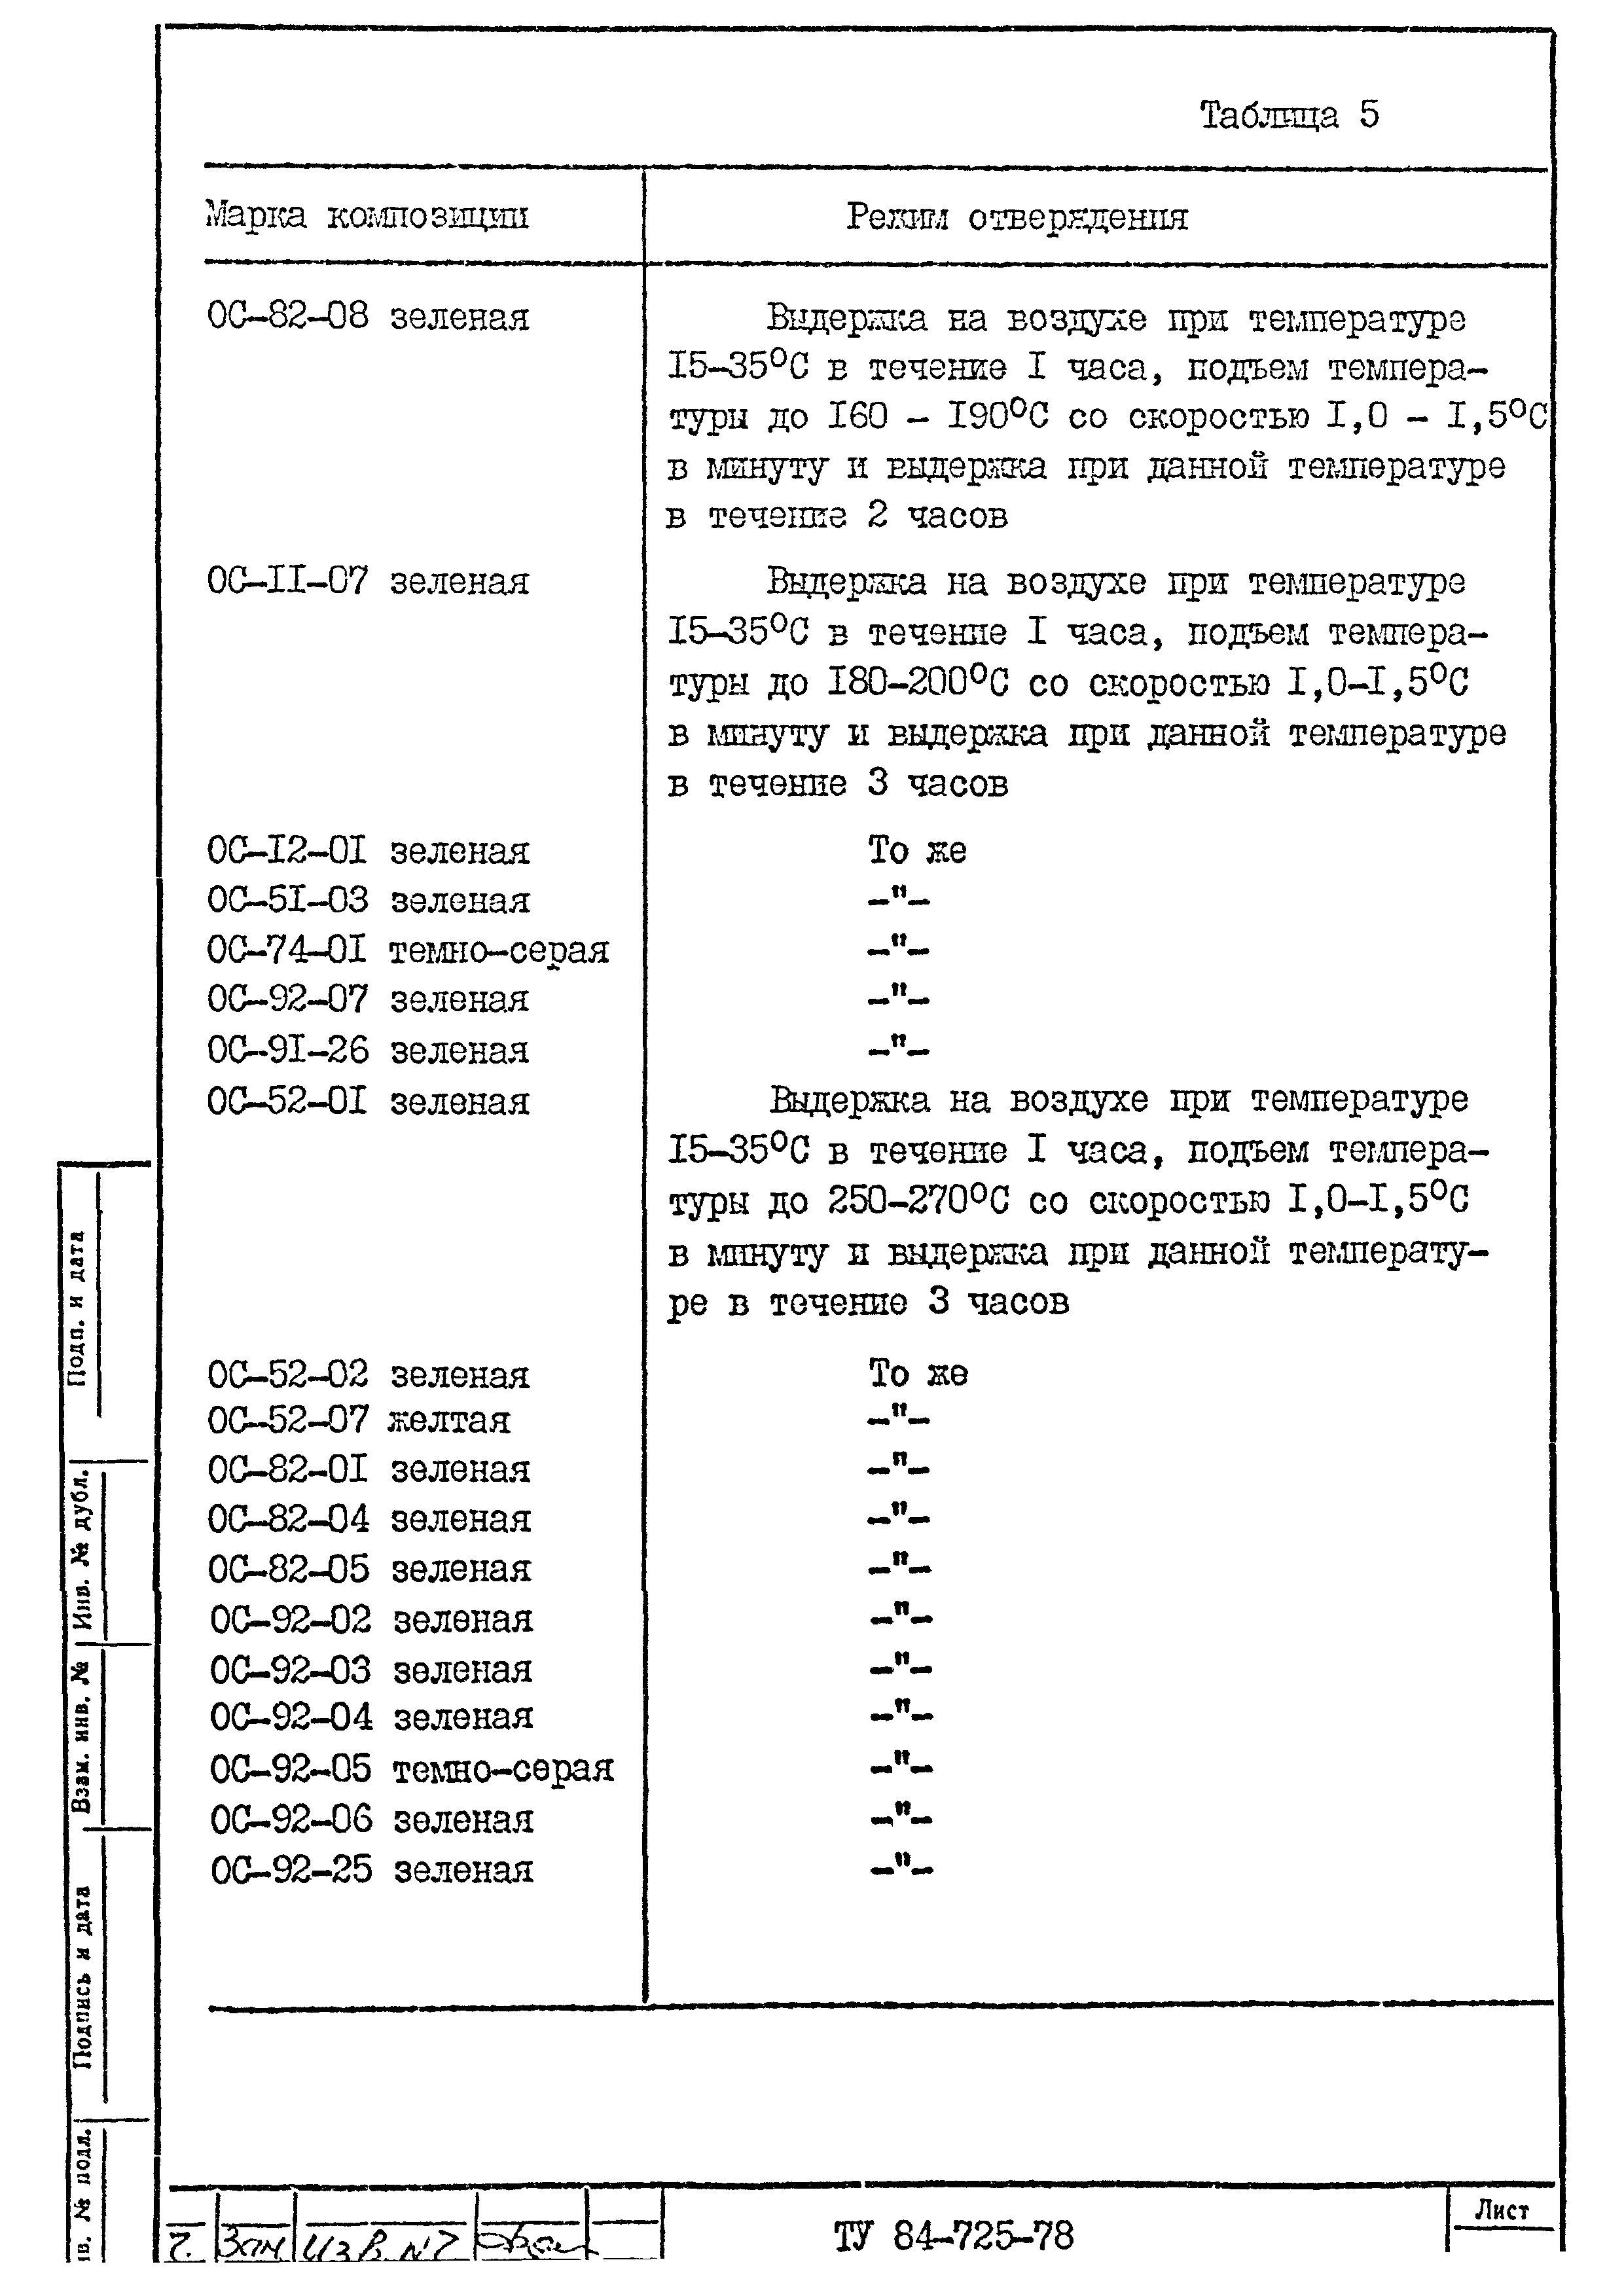 ТУ 84-725-78